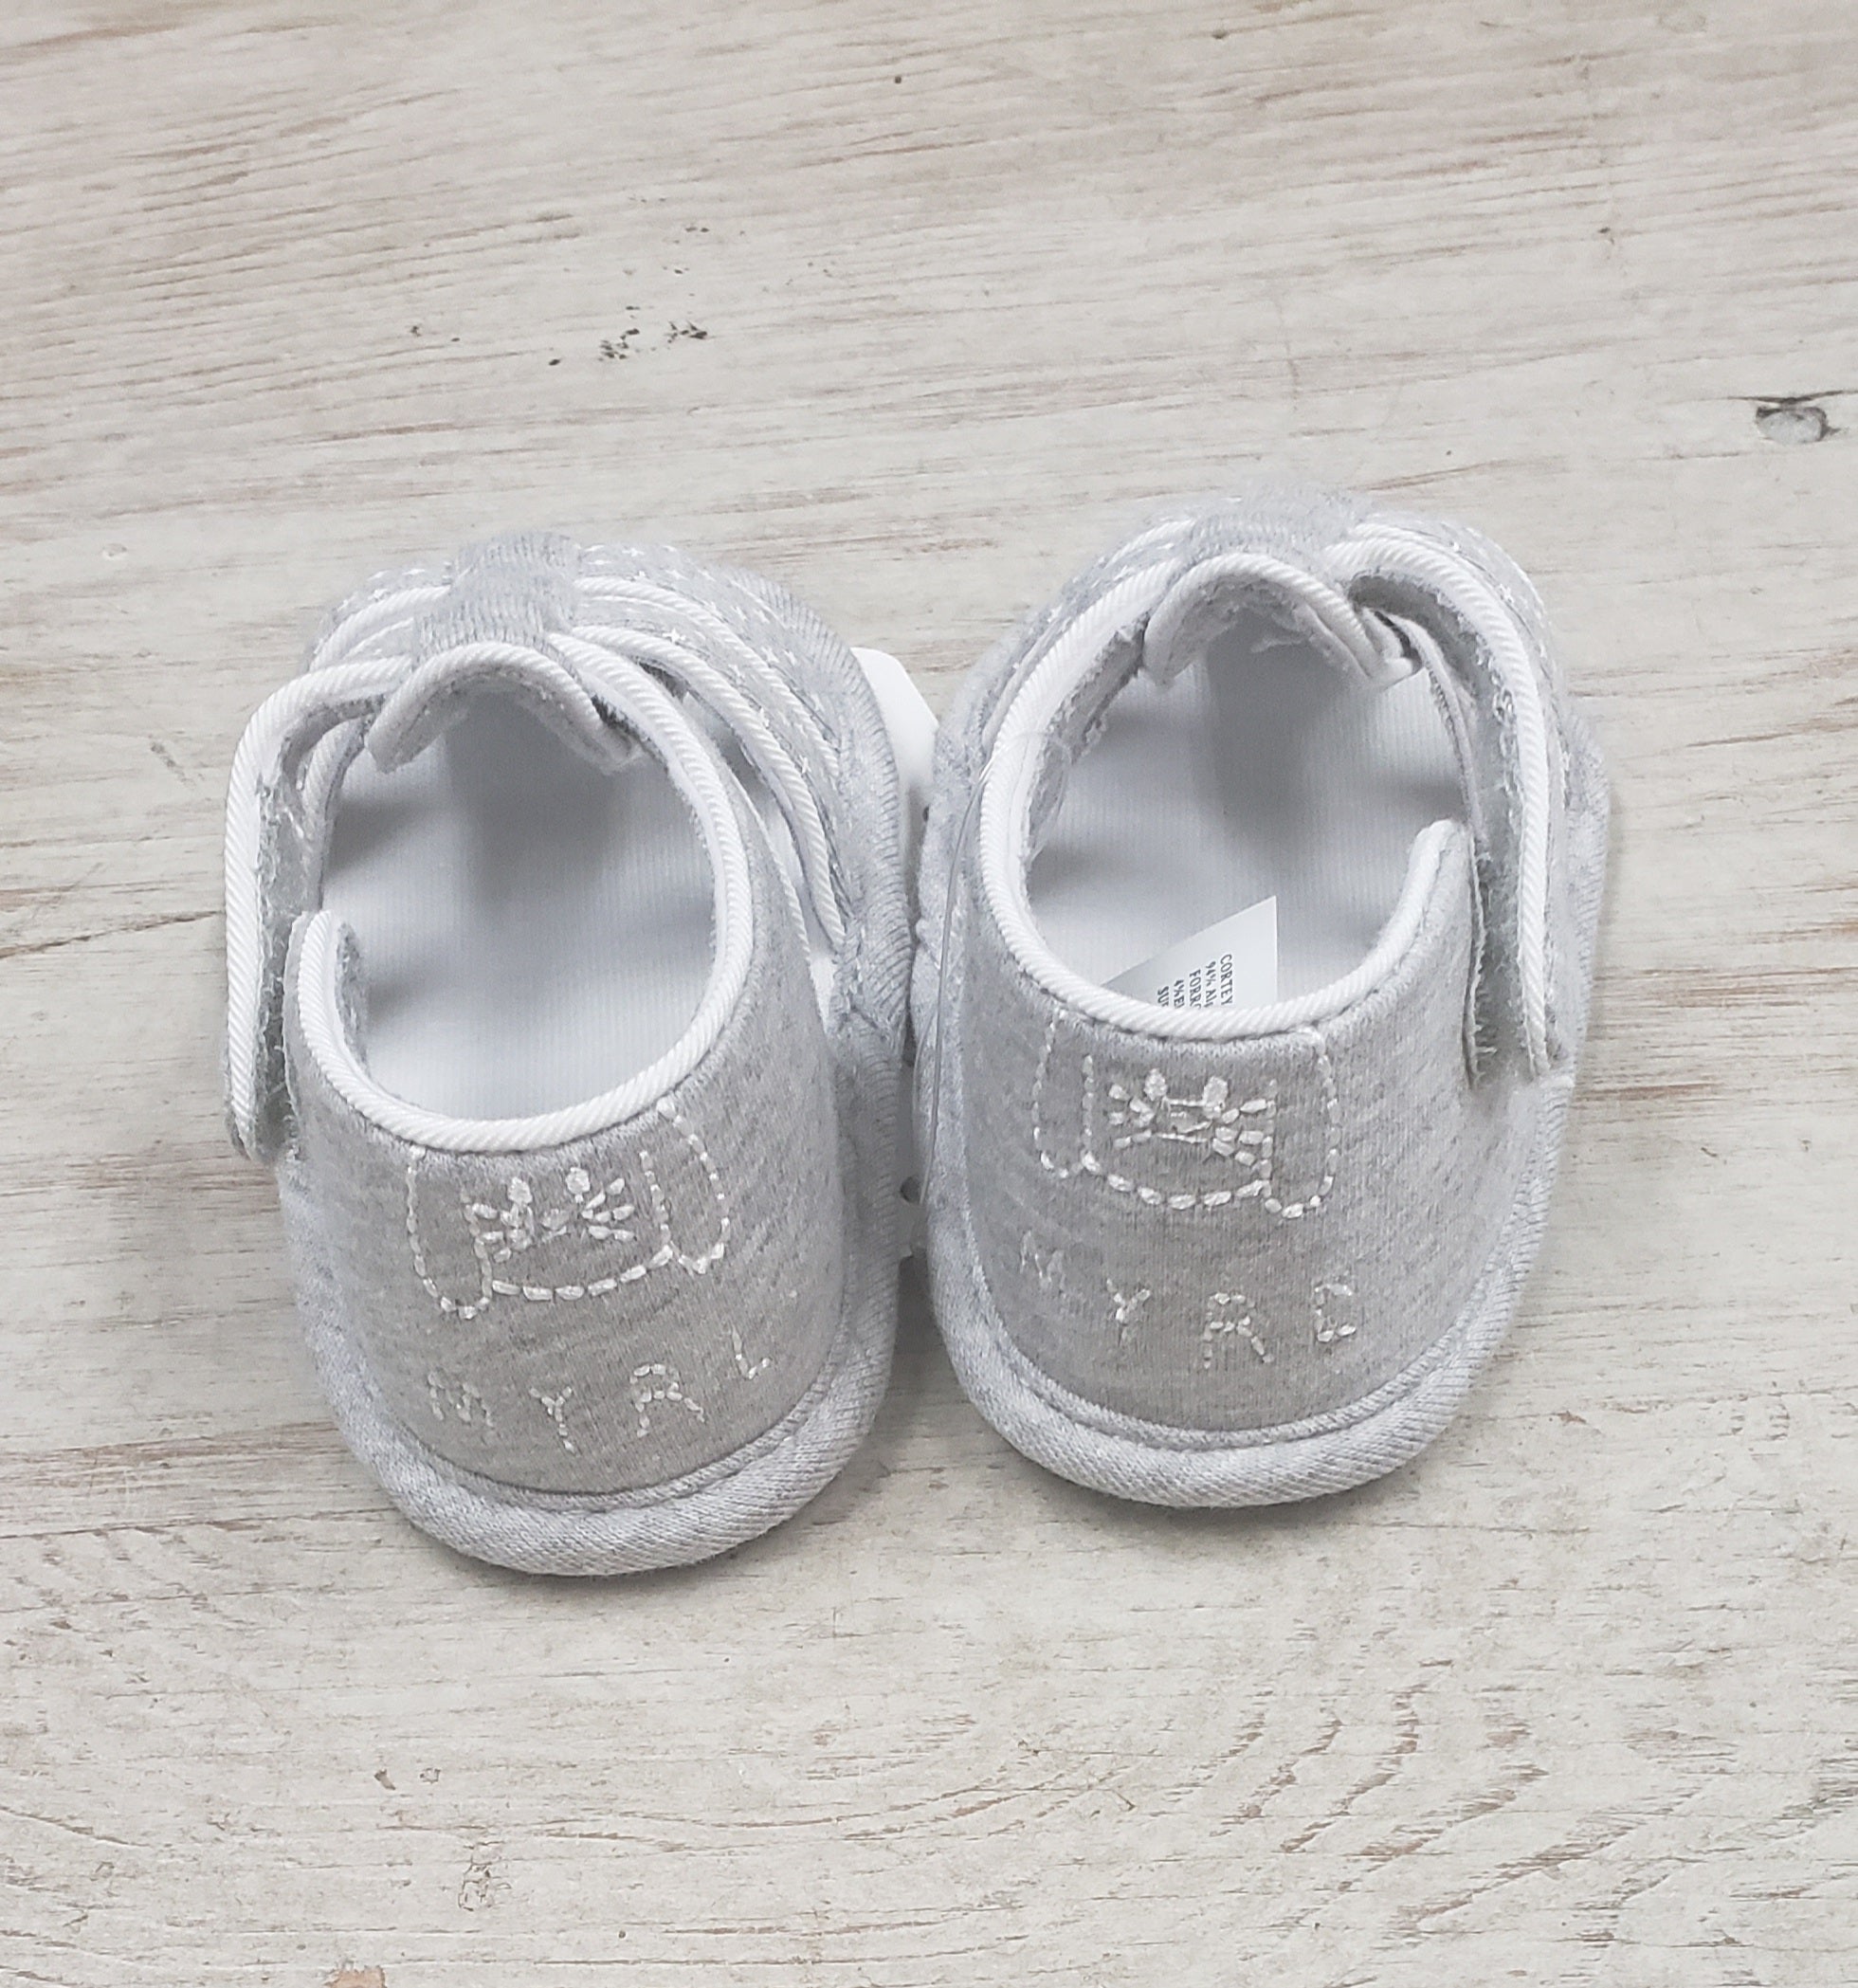 Baby Boys soft sole shoe